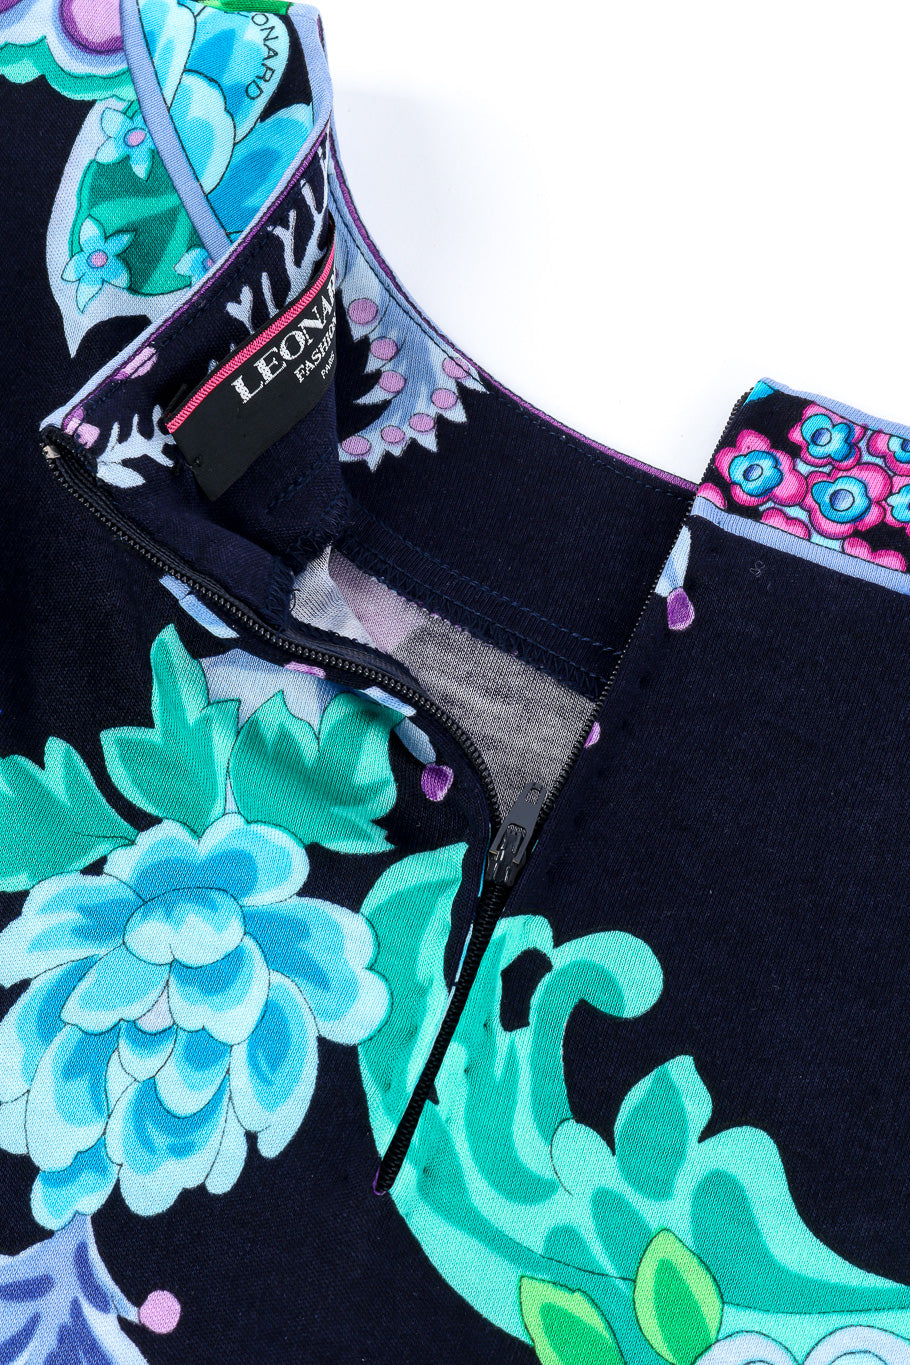 Leonard multi-floral print blouse zipper closure @recessla